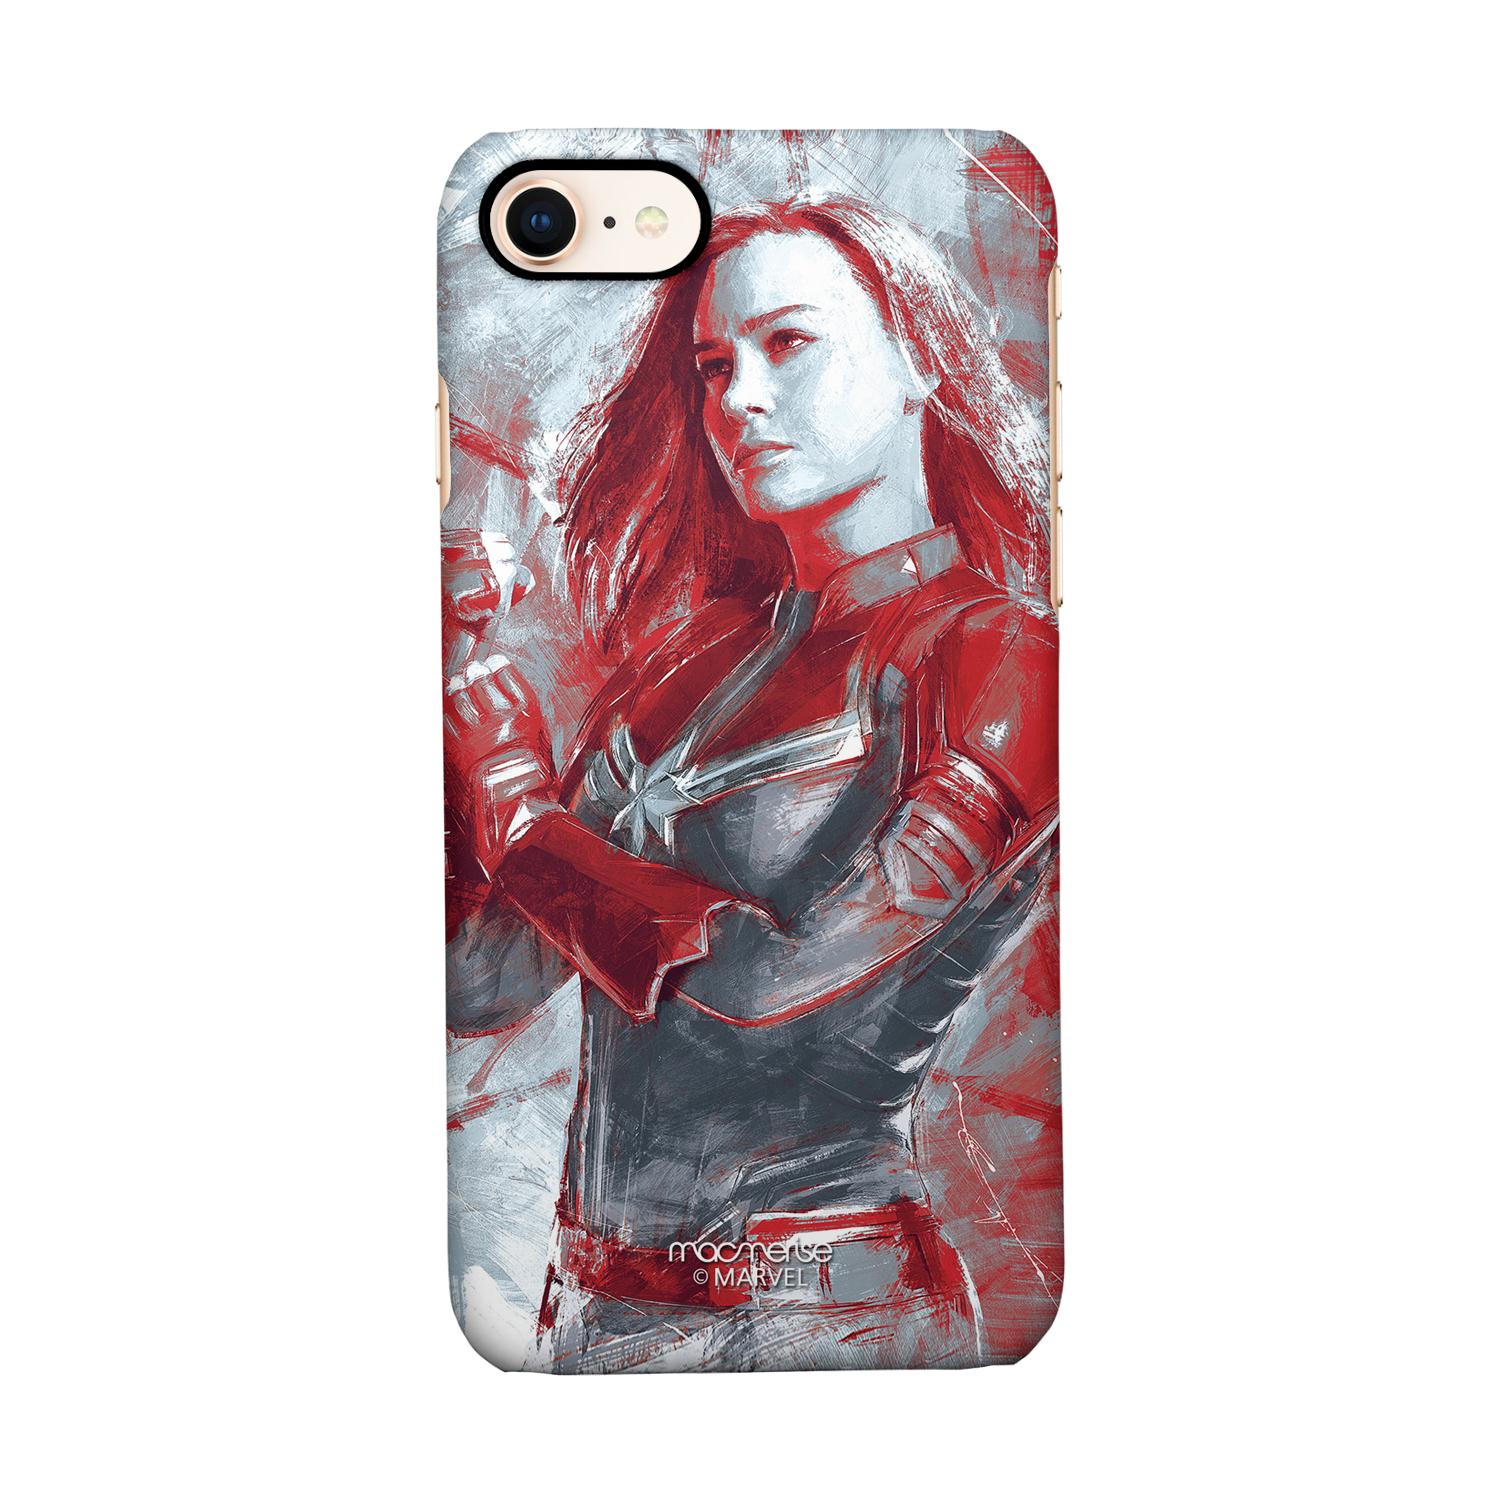 Buy Charcoal Art Capt Marvel - Sleek Phone Case for iPhone 8 Online